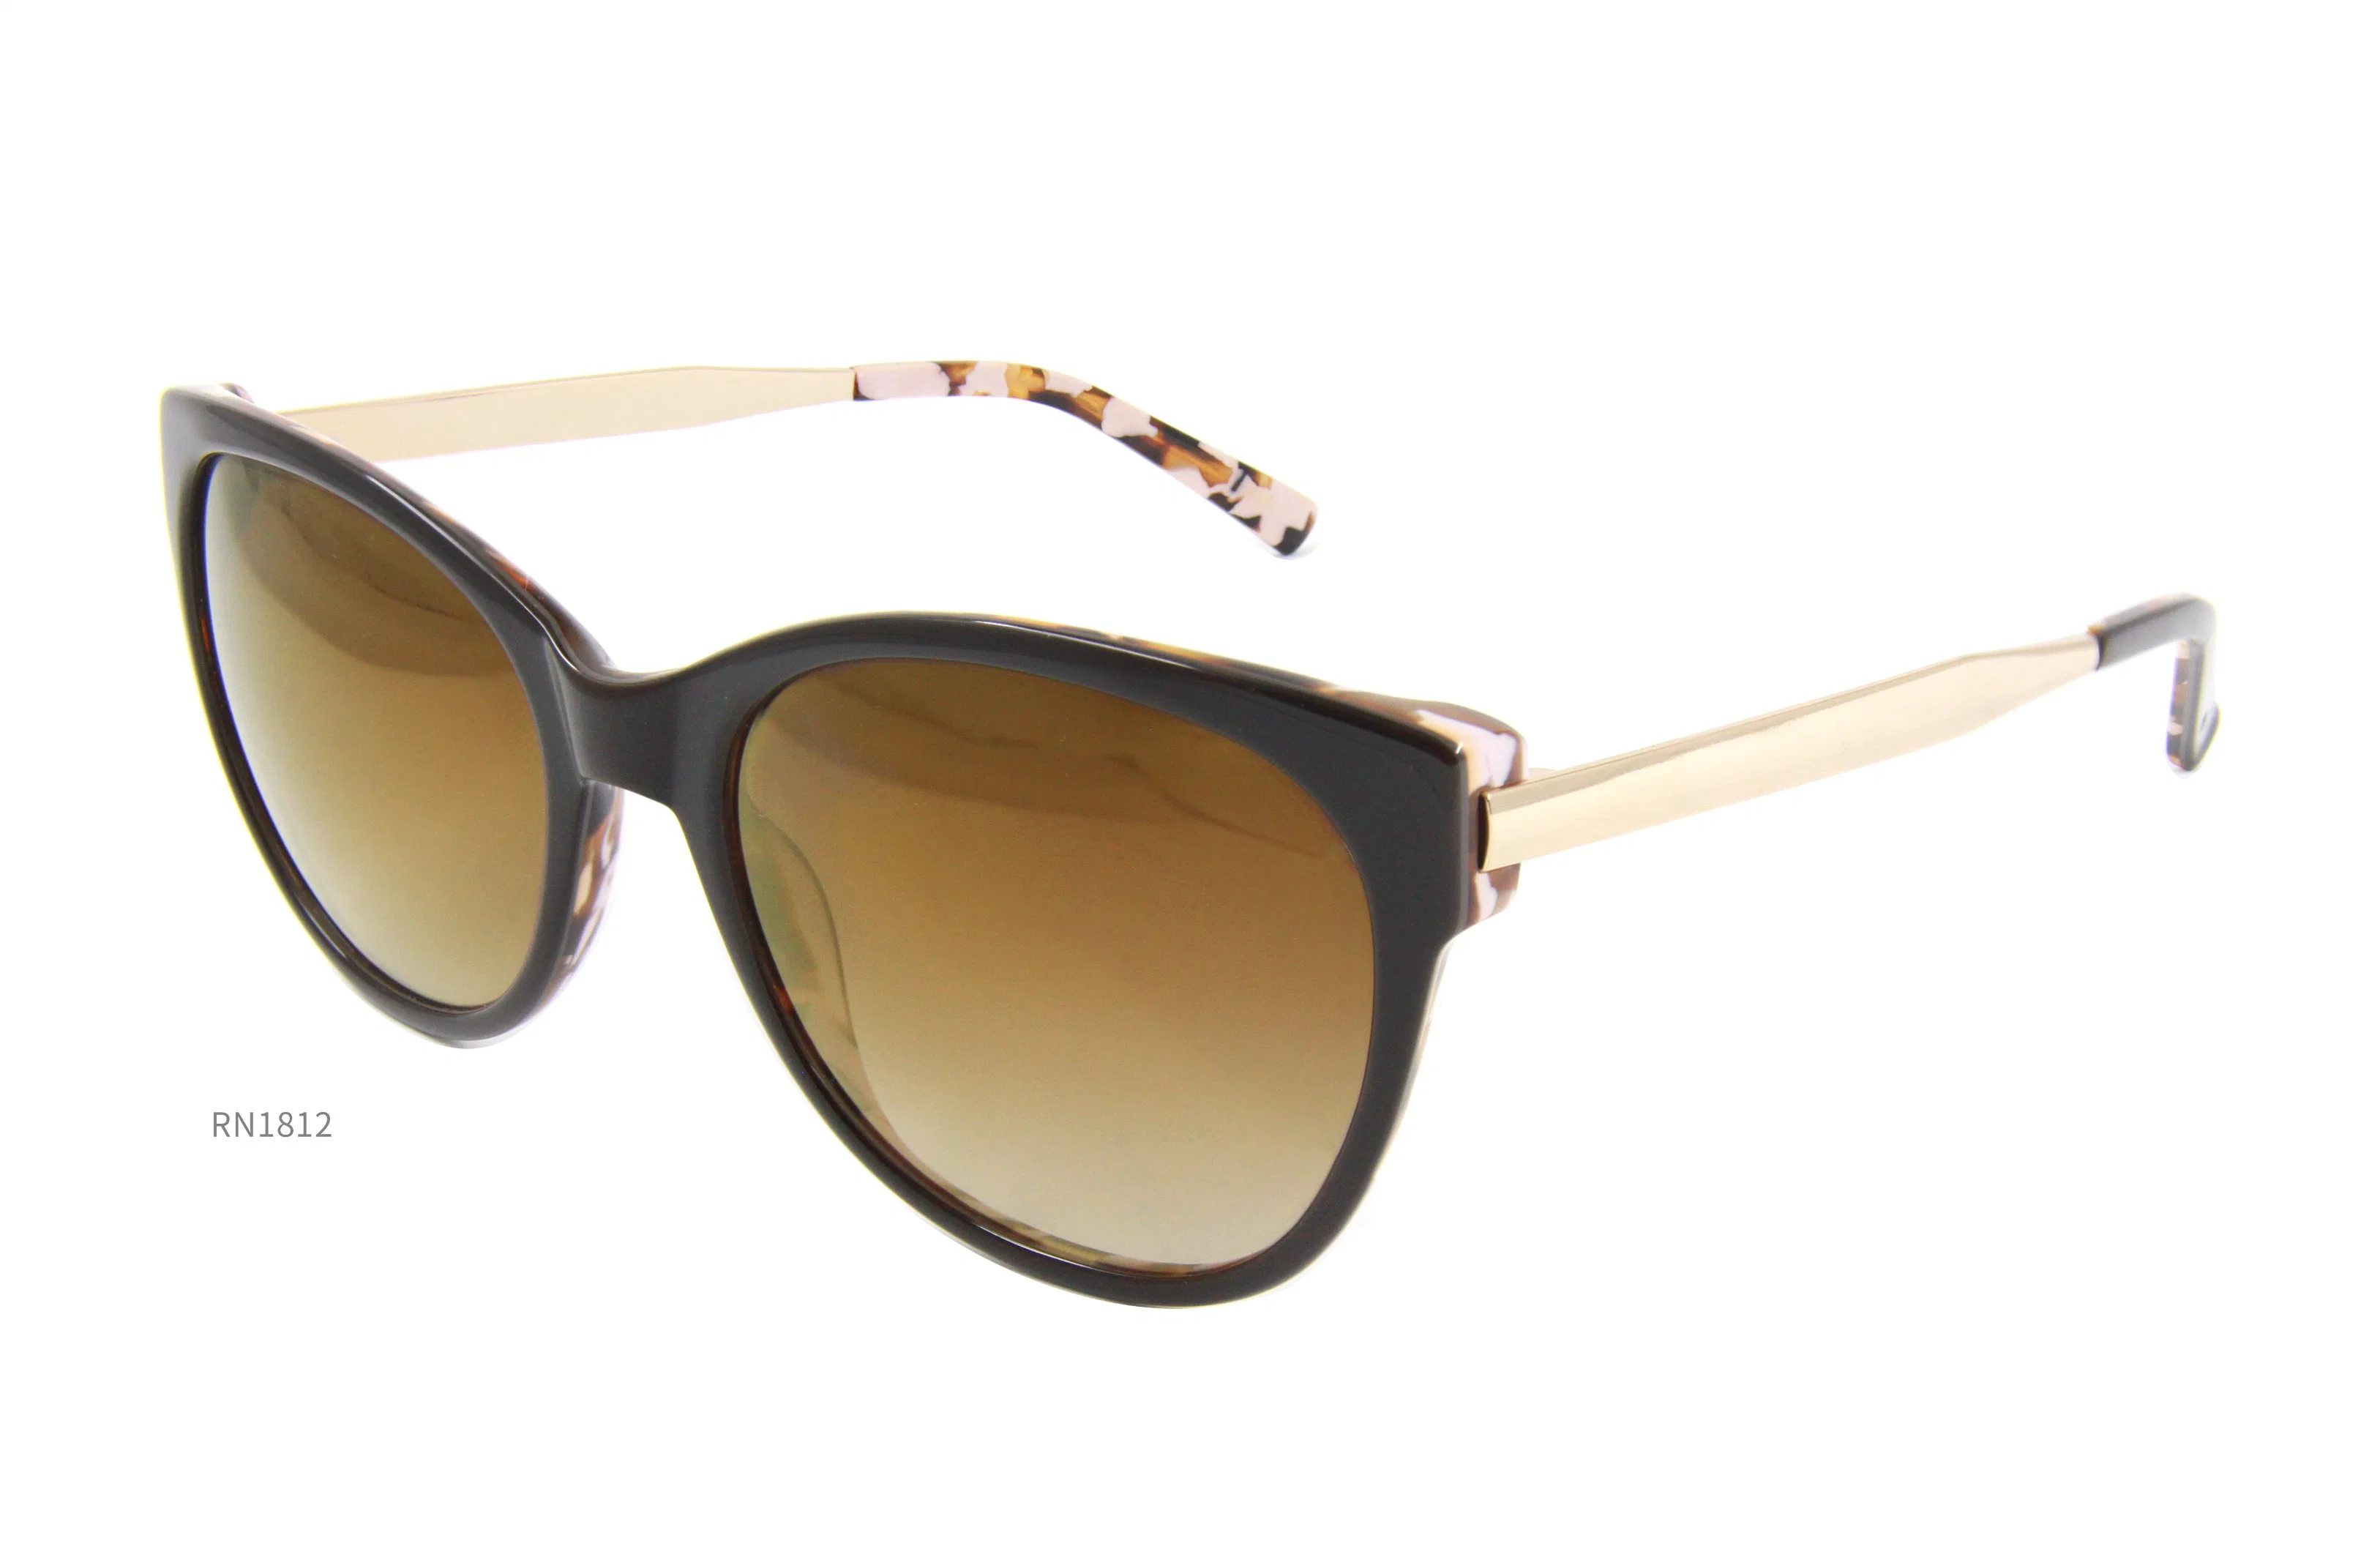 Designer Cat-Eye Shape Mazzucchell Acetate Sunglasses by China Factory